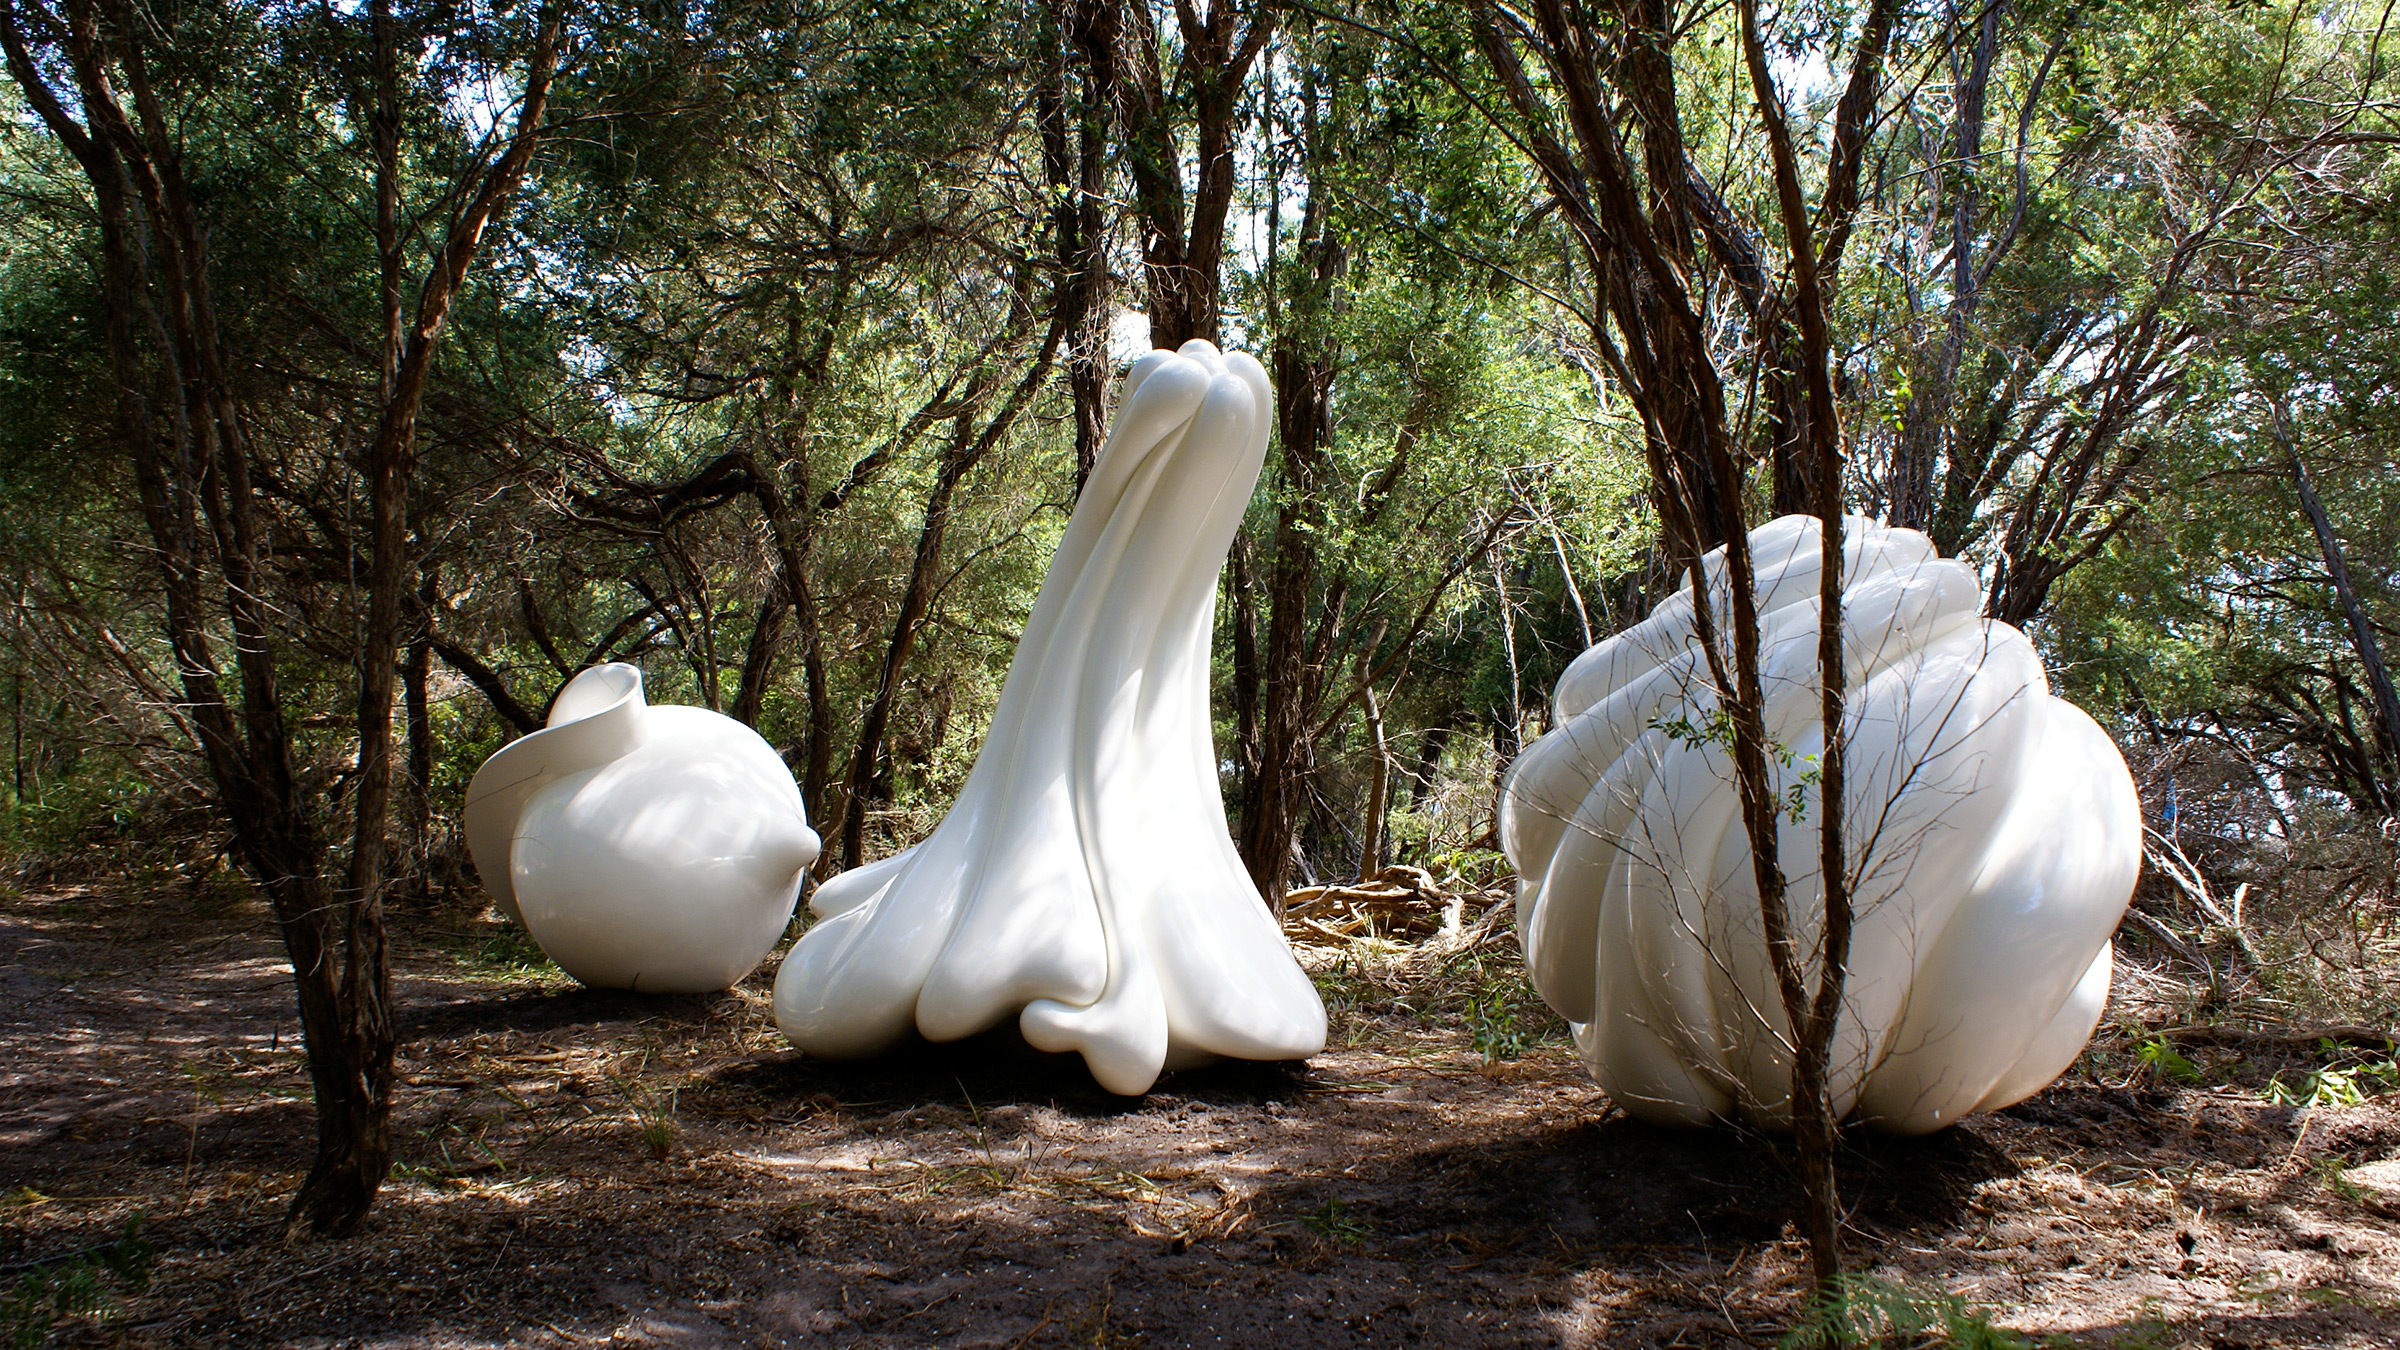 Strange Fruit, 2010. Sculpture by Adrian Mauriks.